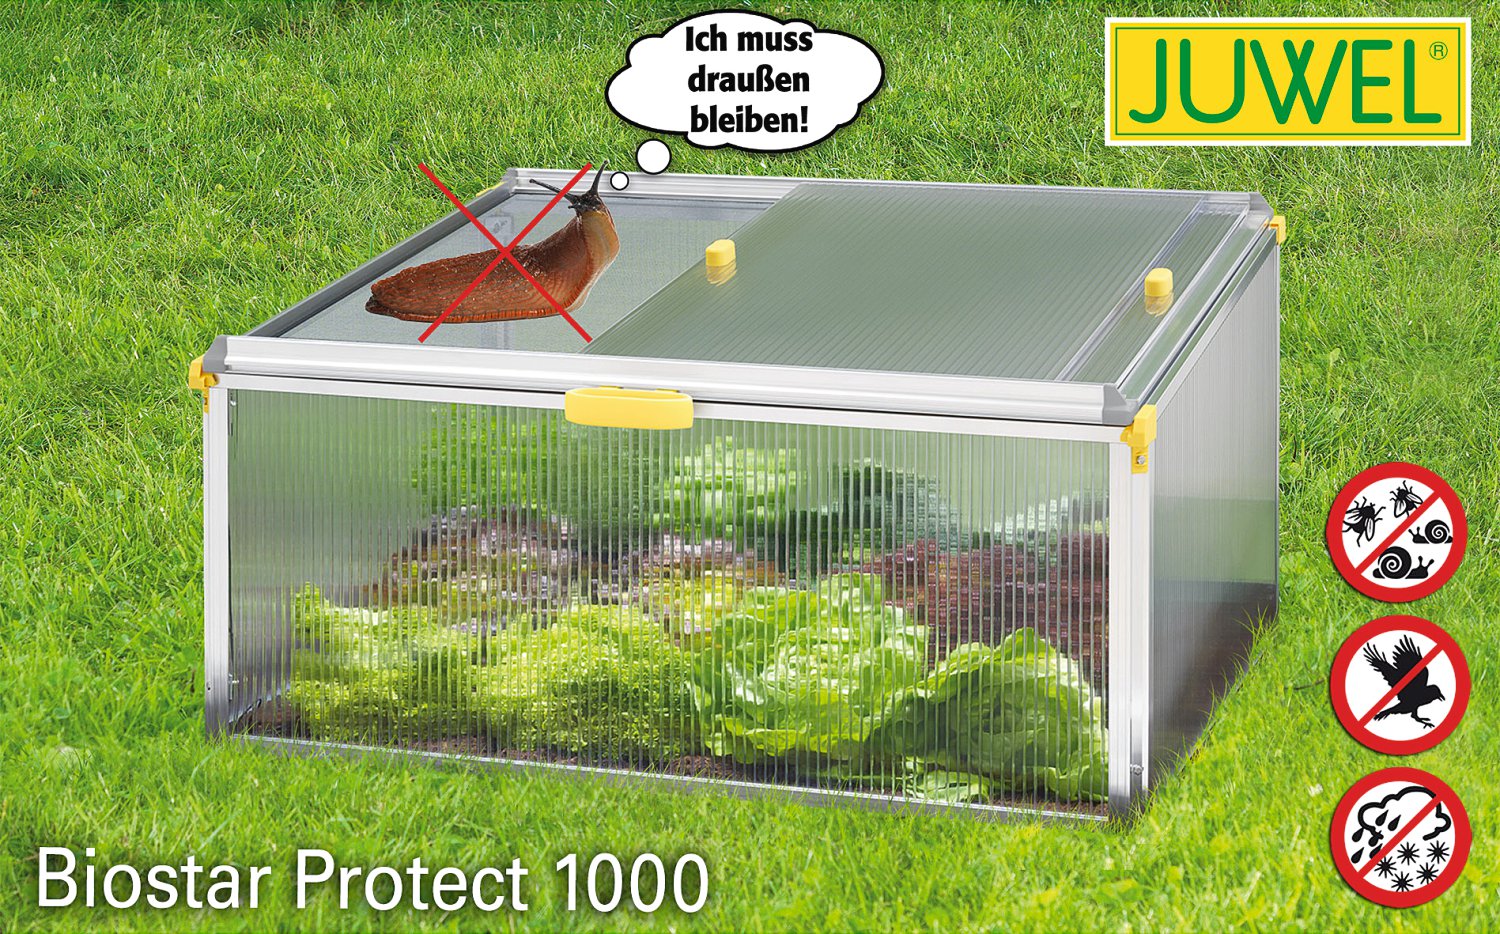 JUWEL Ganzjahres-Beetsystem BIOSTAR PROTECT 1000